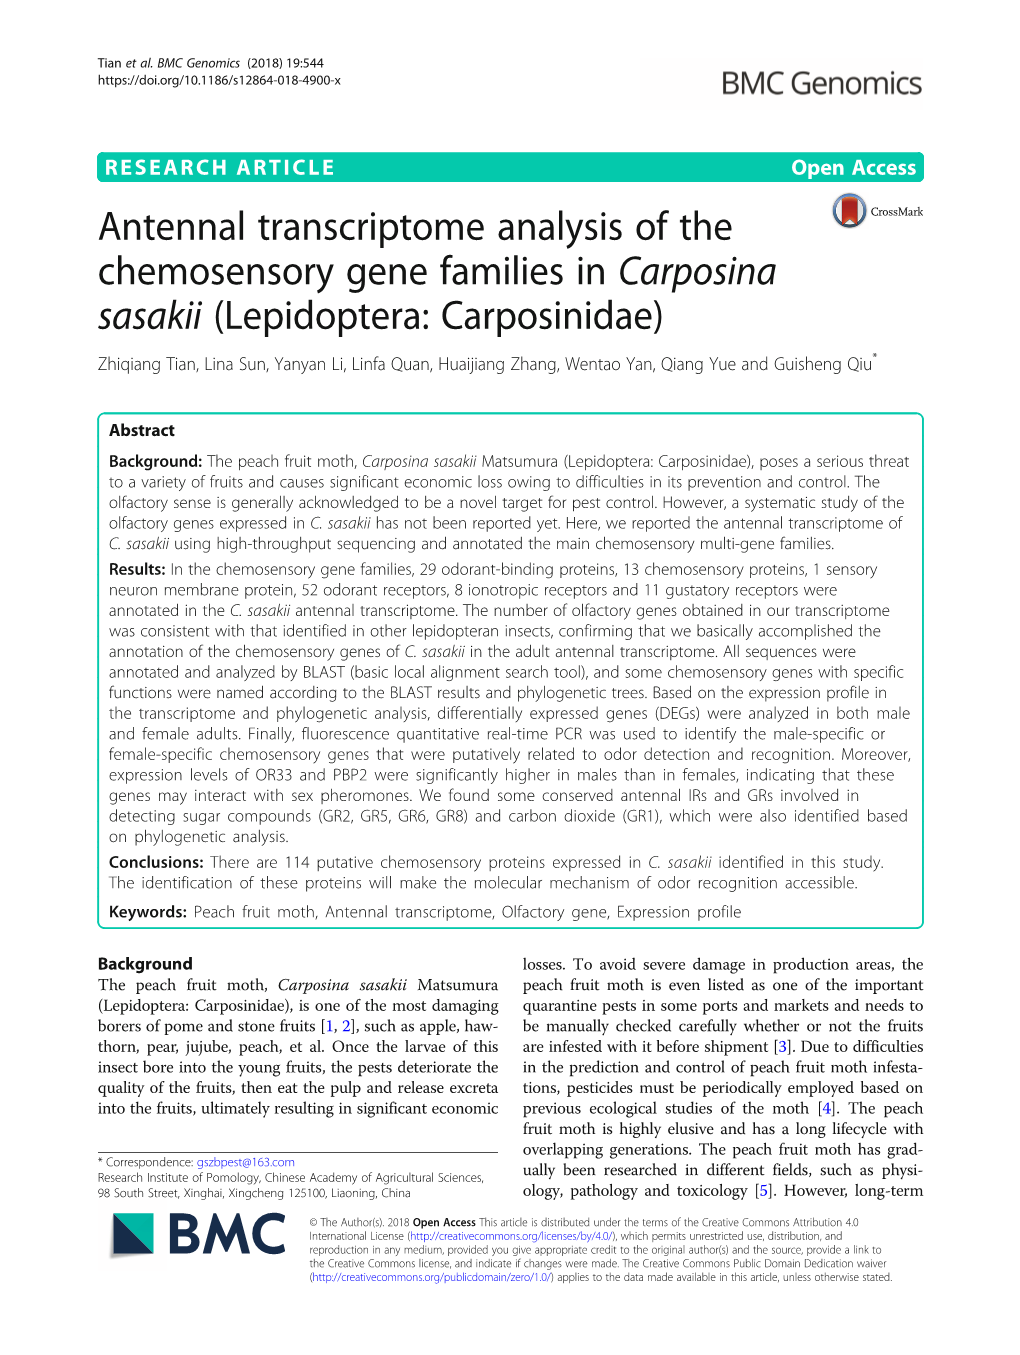 Antennal Transcriptome Analysis of the Chemosensory